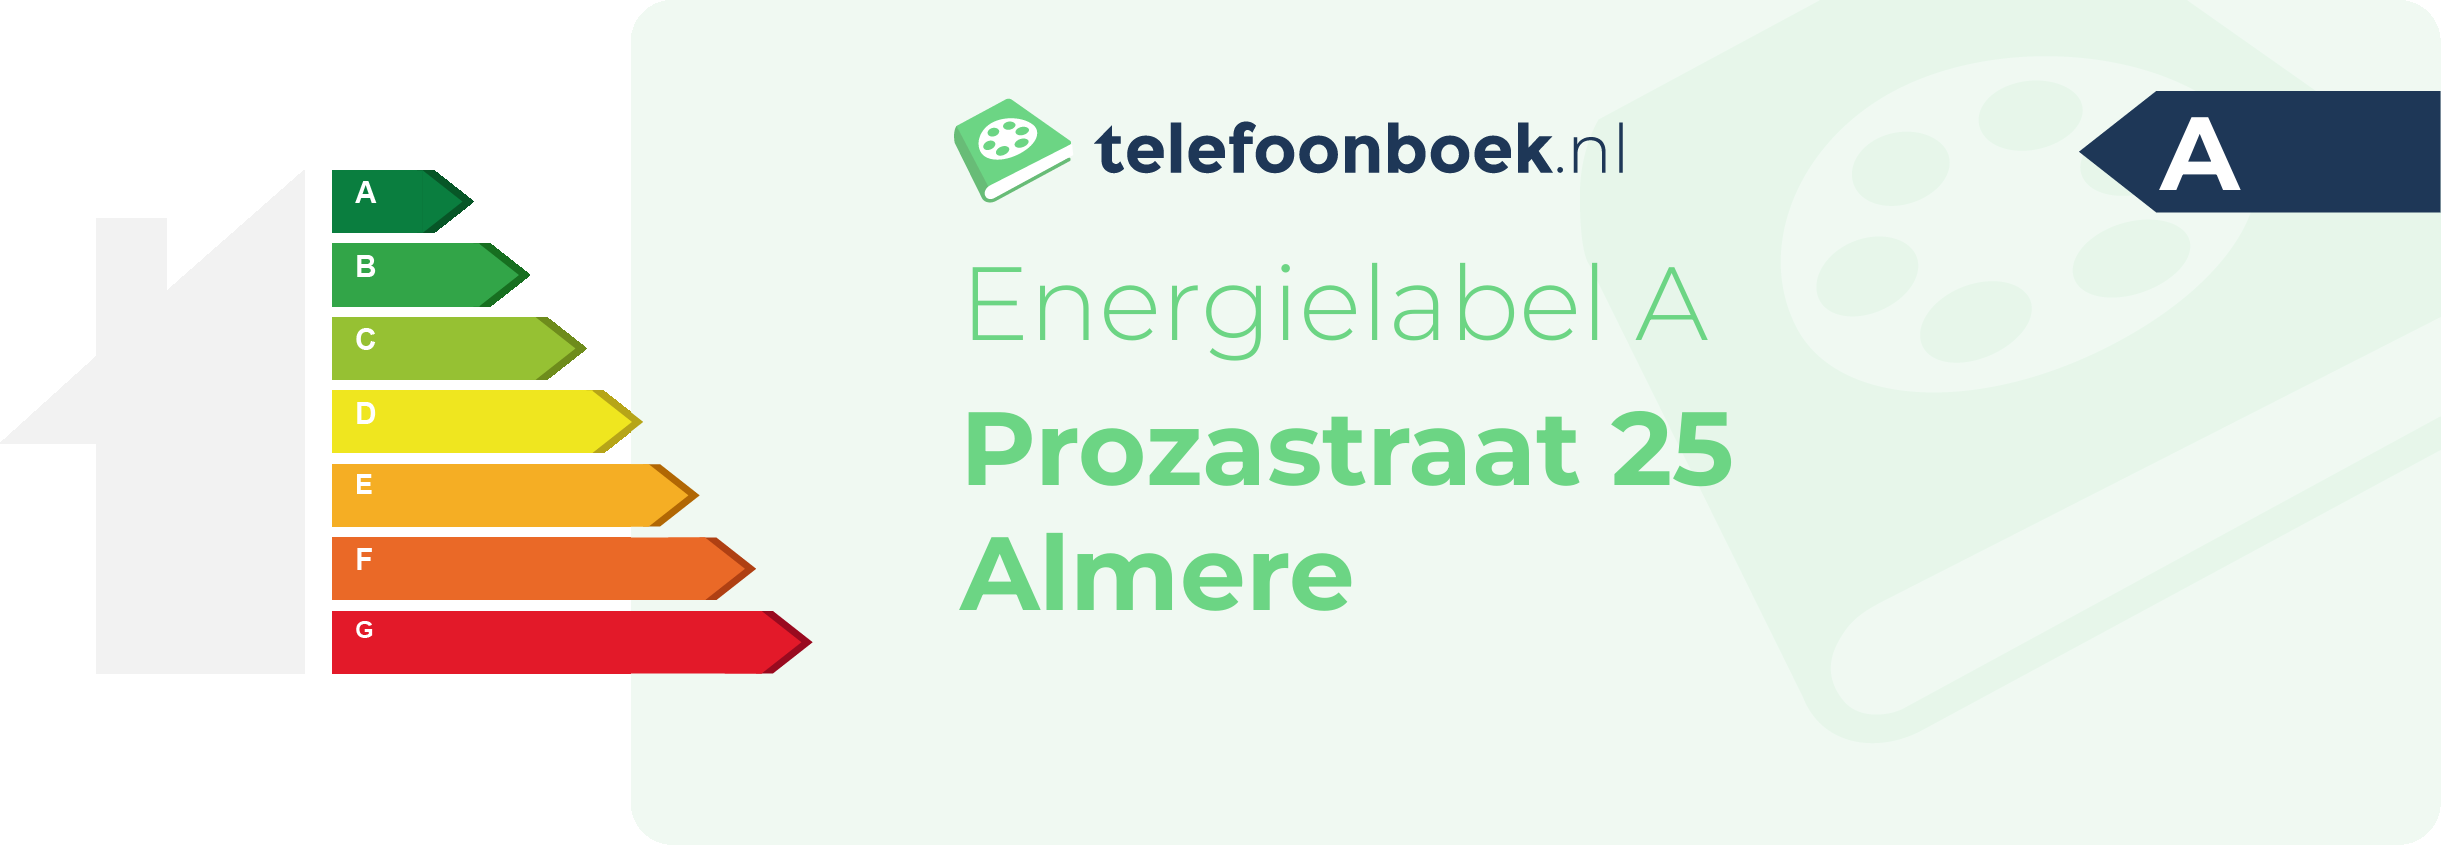 Energielabel Prozastraat 25 Almere